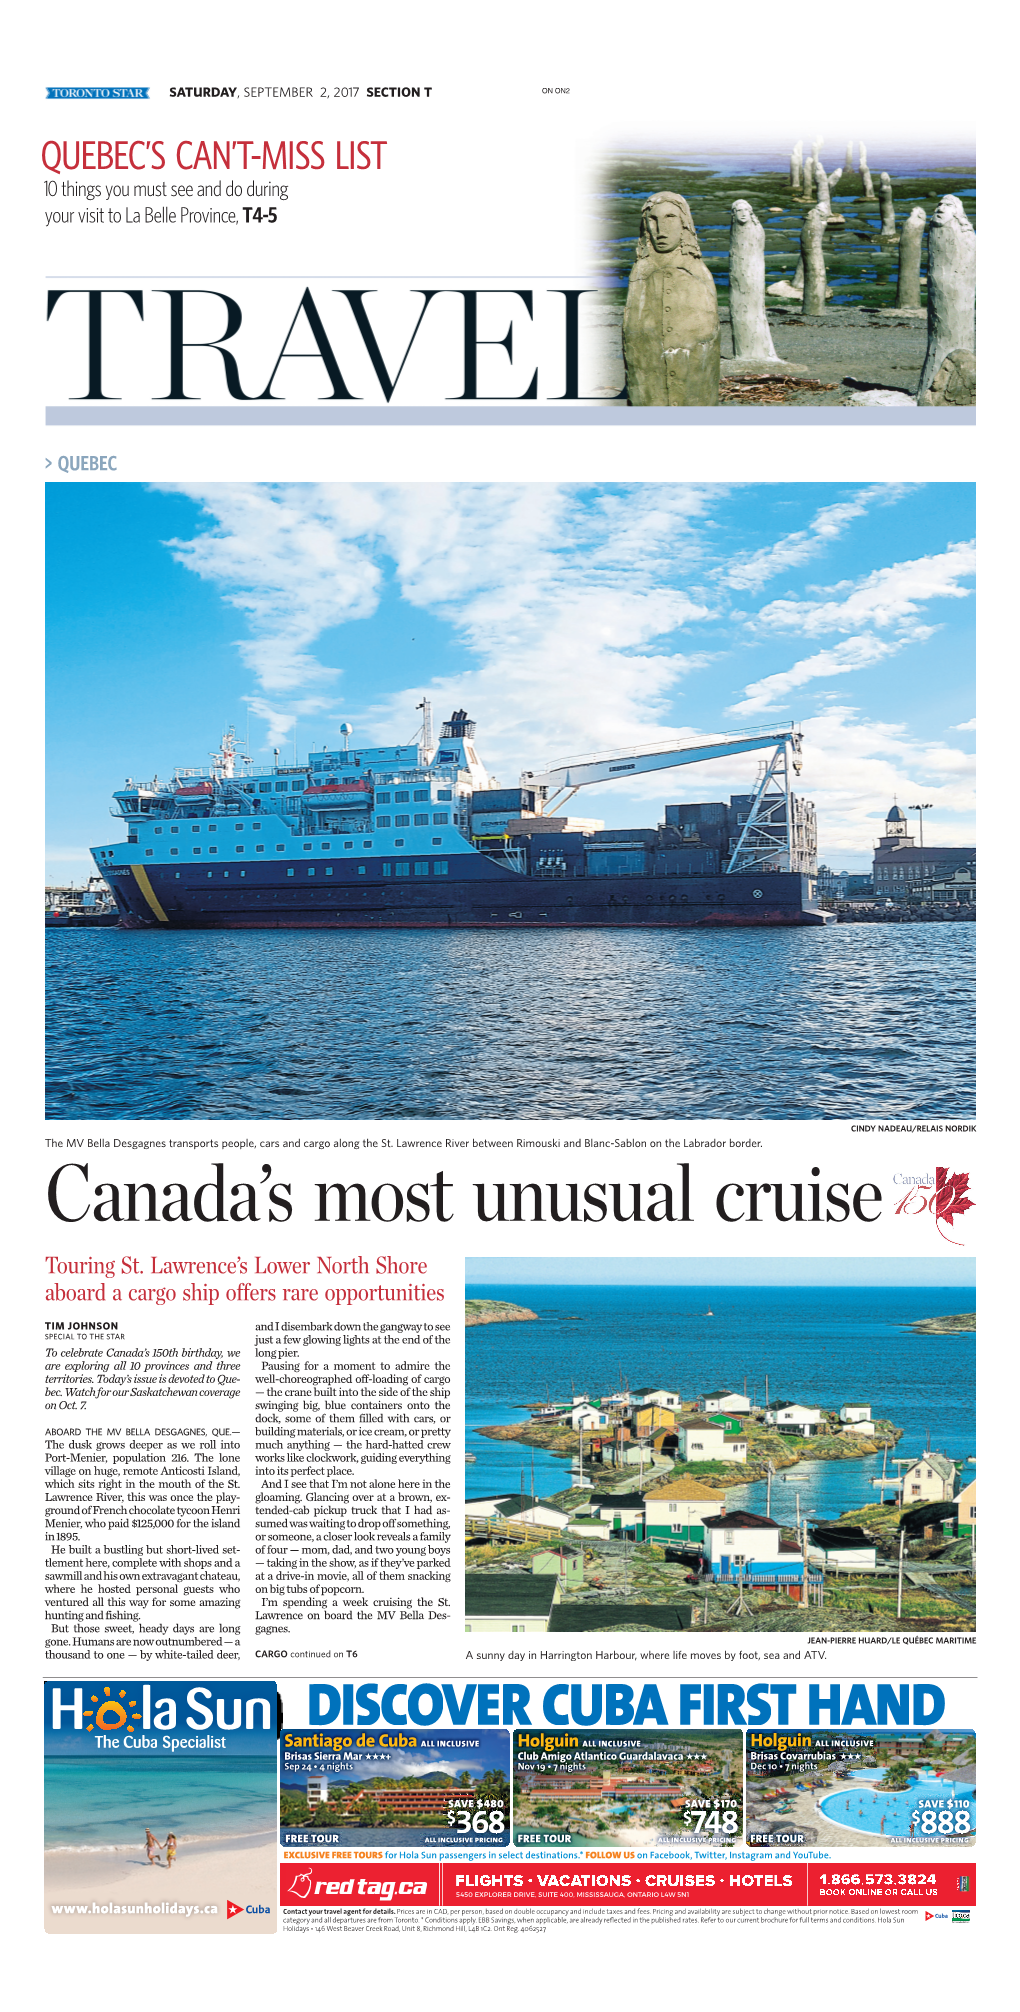 Canada's Most Unusual Cruise